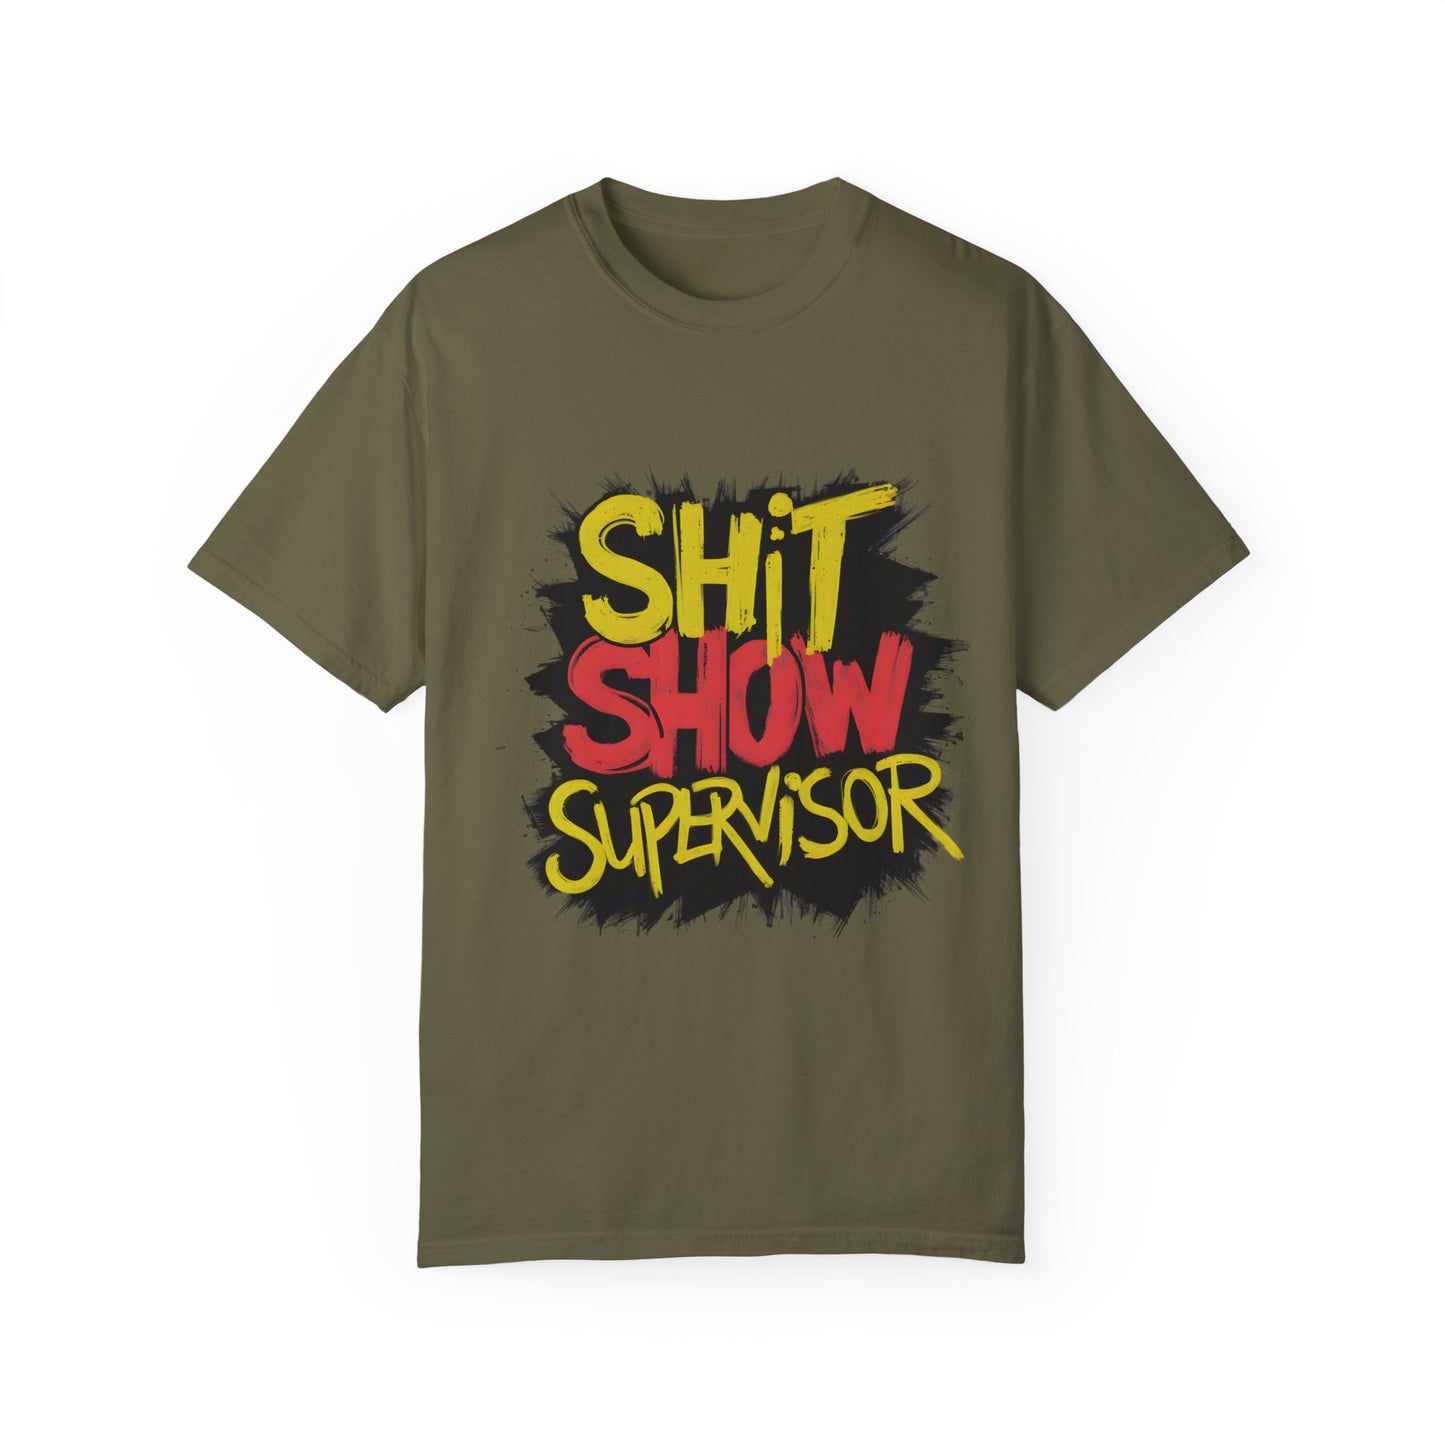 Shit Show Supervisor Urban Sarcastic Graphic Unisex Garment Dyed T-shirt Cotton Funny Humorous Graphic Soft Premium Unisex Men Women Sage T-shirt Birthday Gift-13